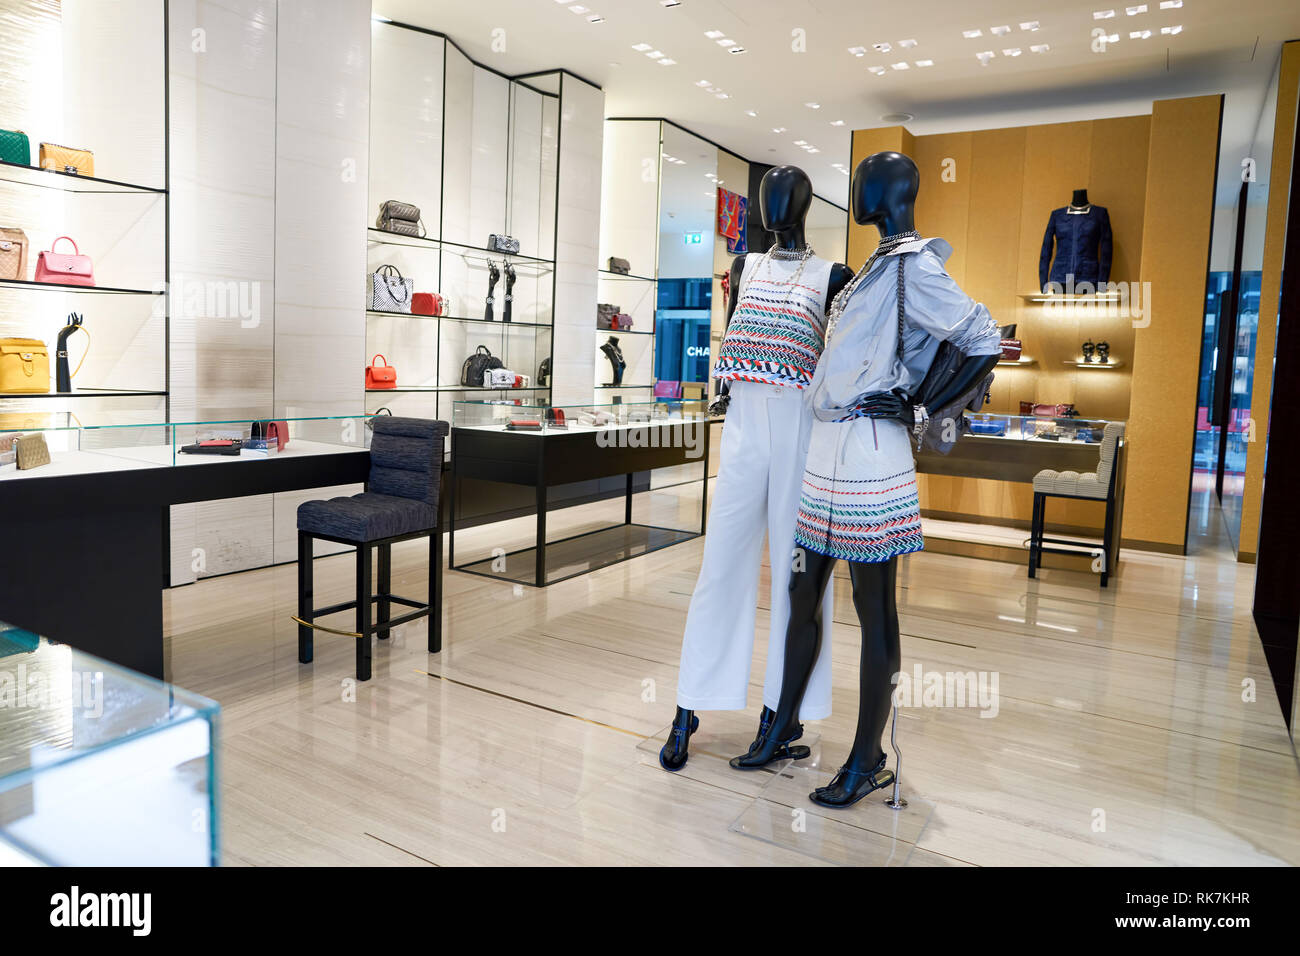 DUBAI, UAE - APRIL 08, 2016: Inside Chanel Store At Dubai